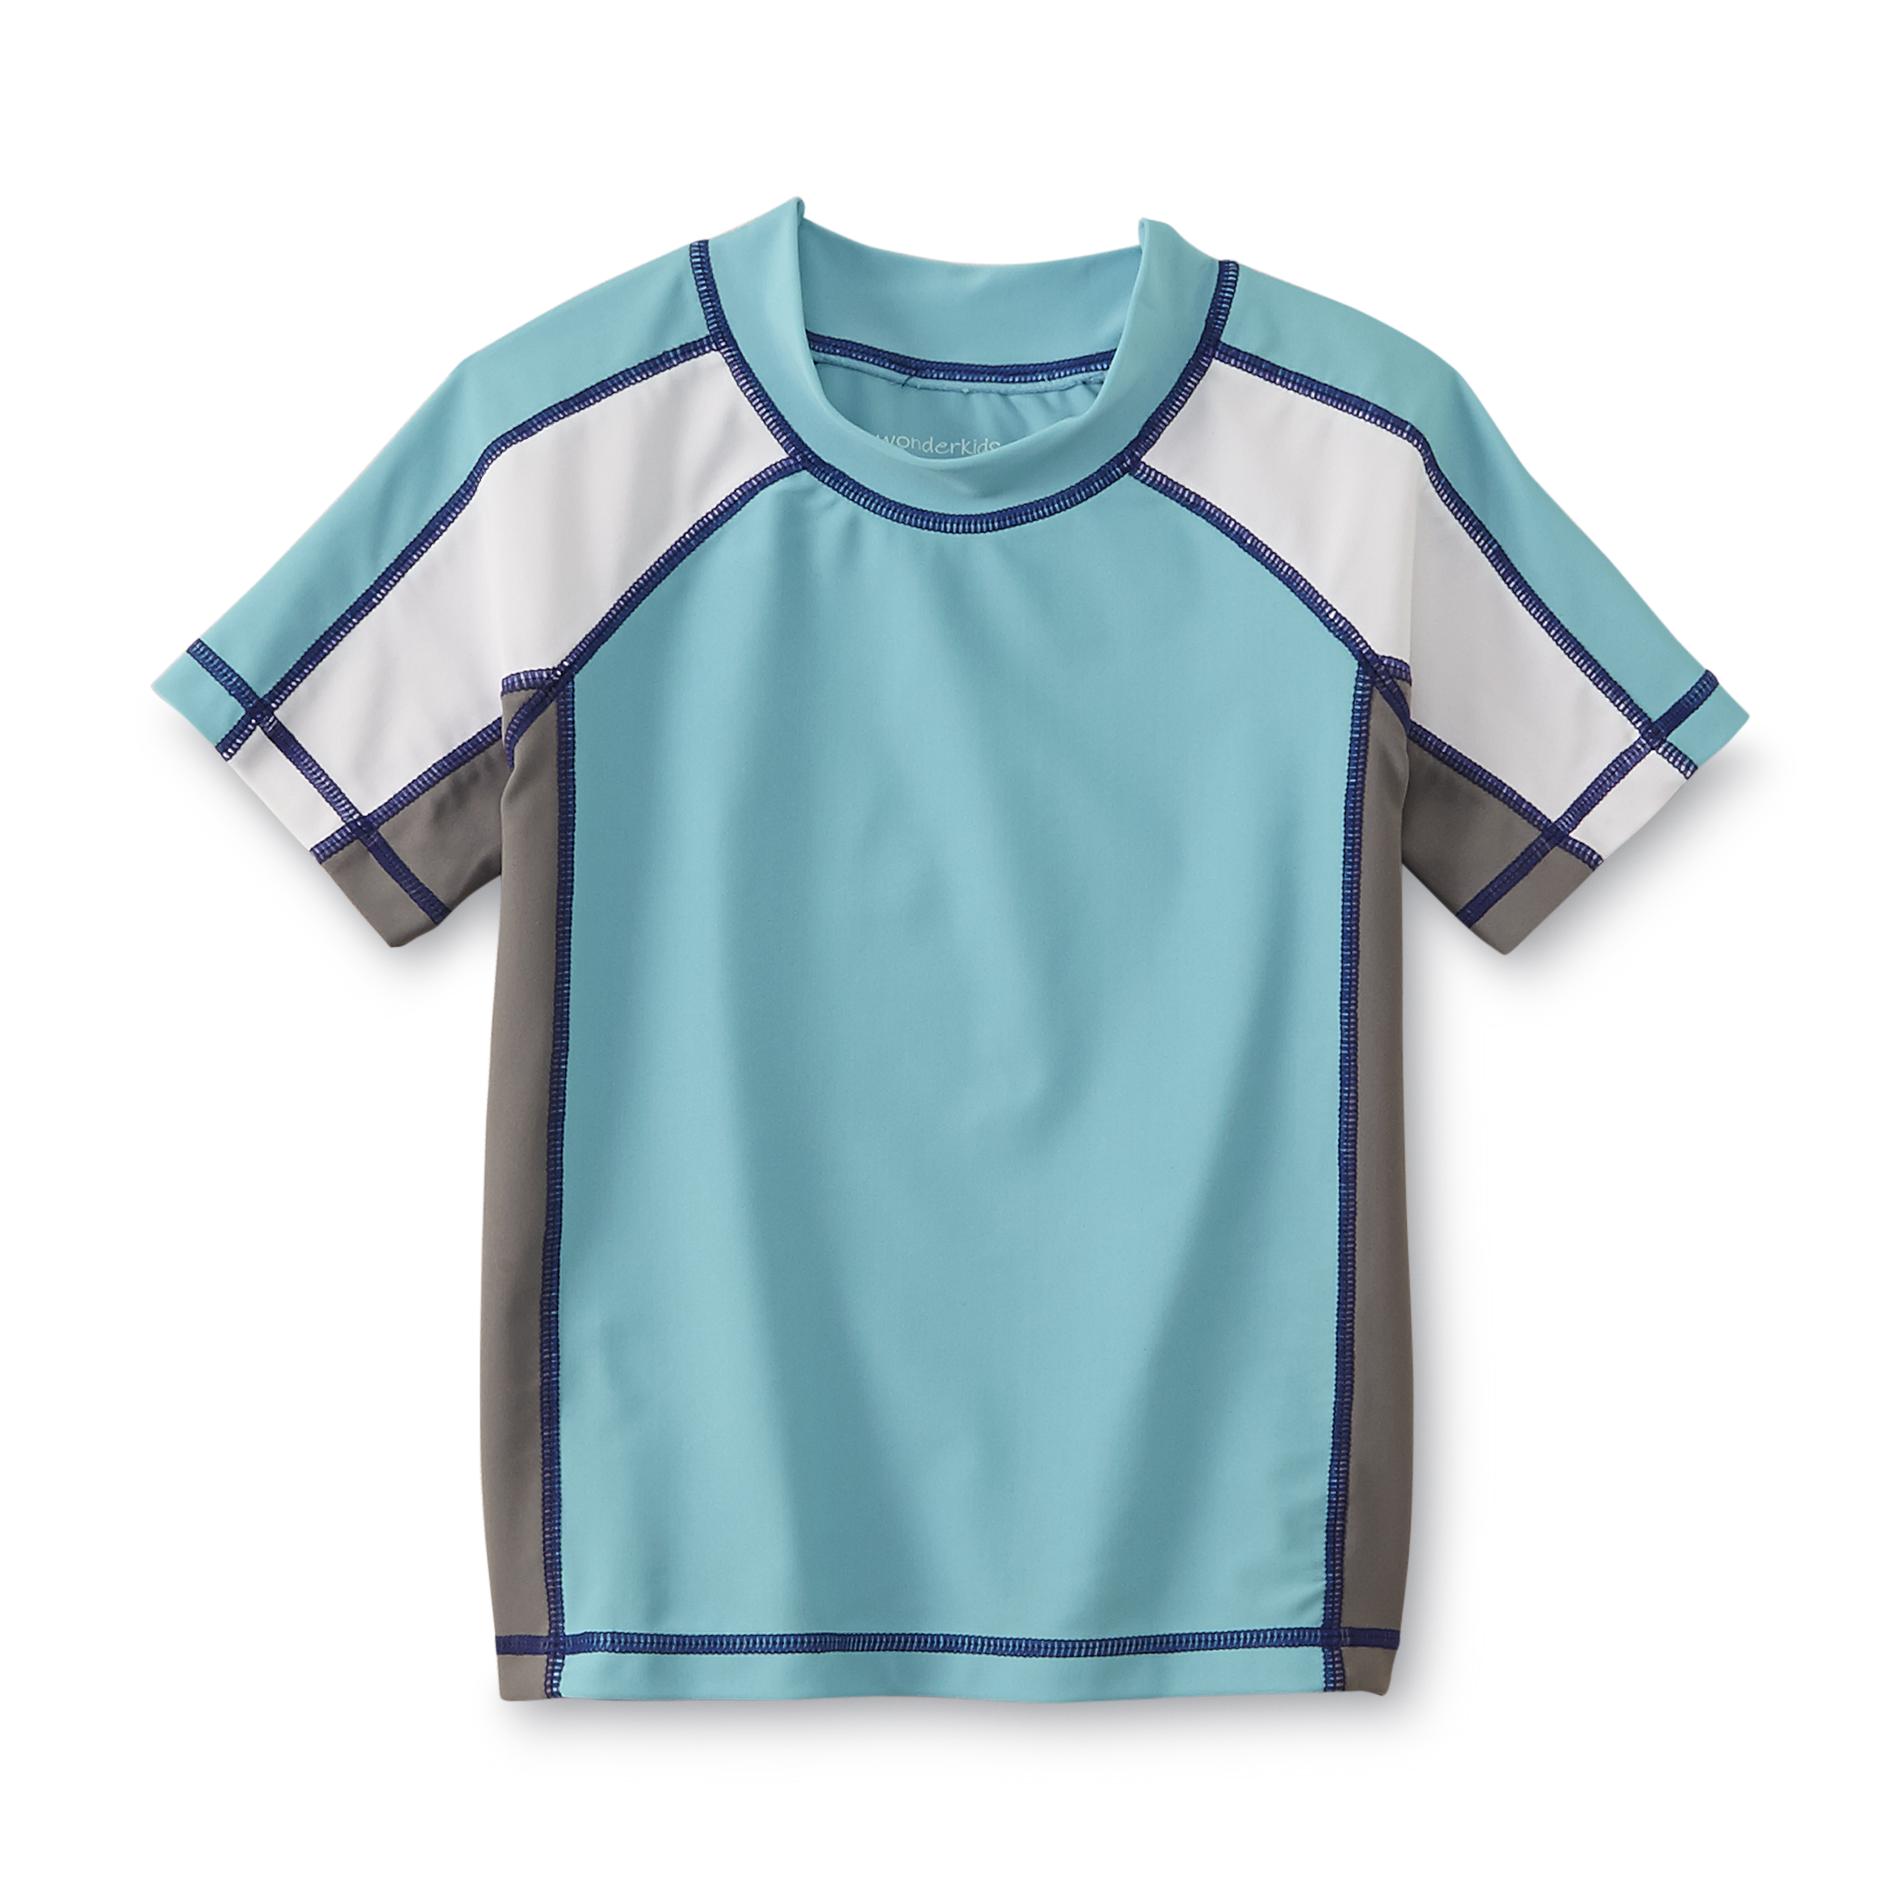 WonderKids Infant & Toddler Boy's Swim Shirt - Colorblock